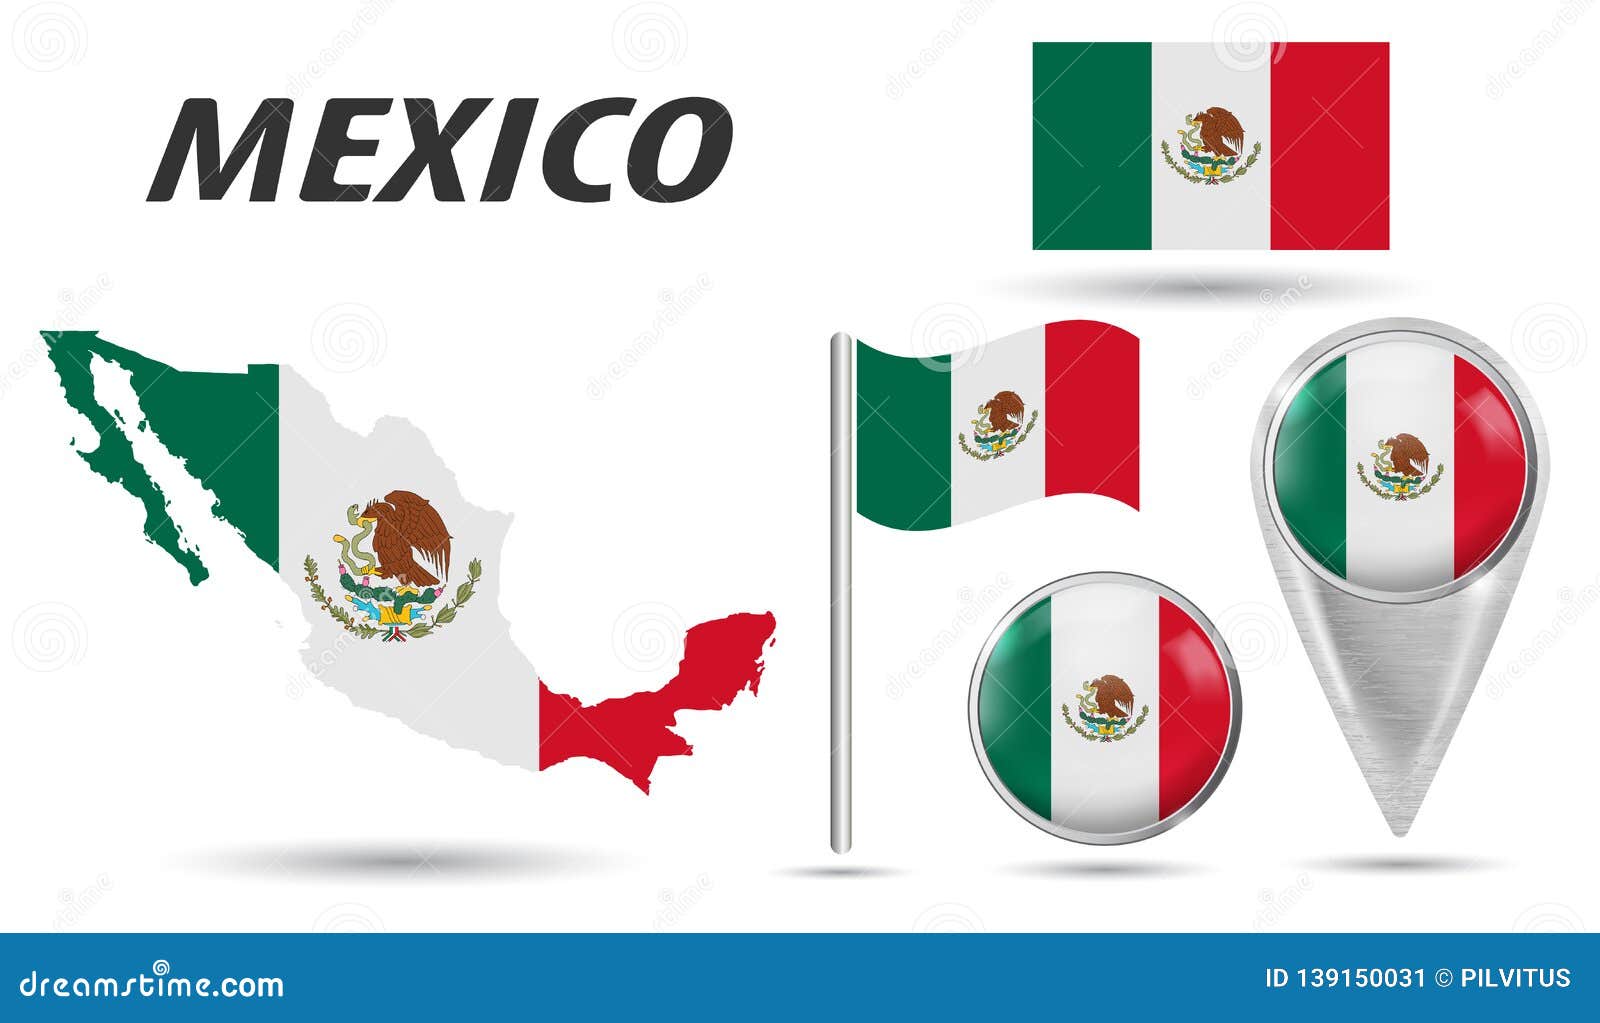 Mexico Mexican Cute Little Boy Flag Country World Nation Map Sign Symbol Design Element Art Logo SVG PNG Clipart Vector Cricut Cut Cutting